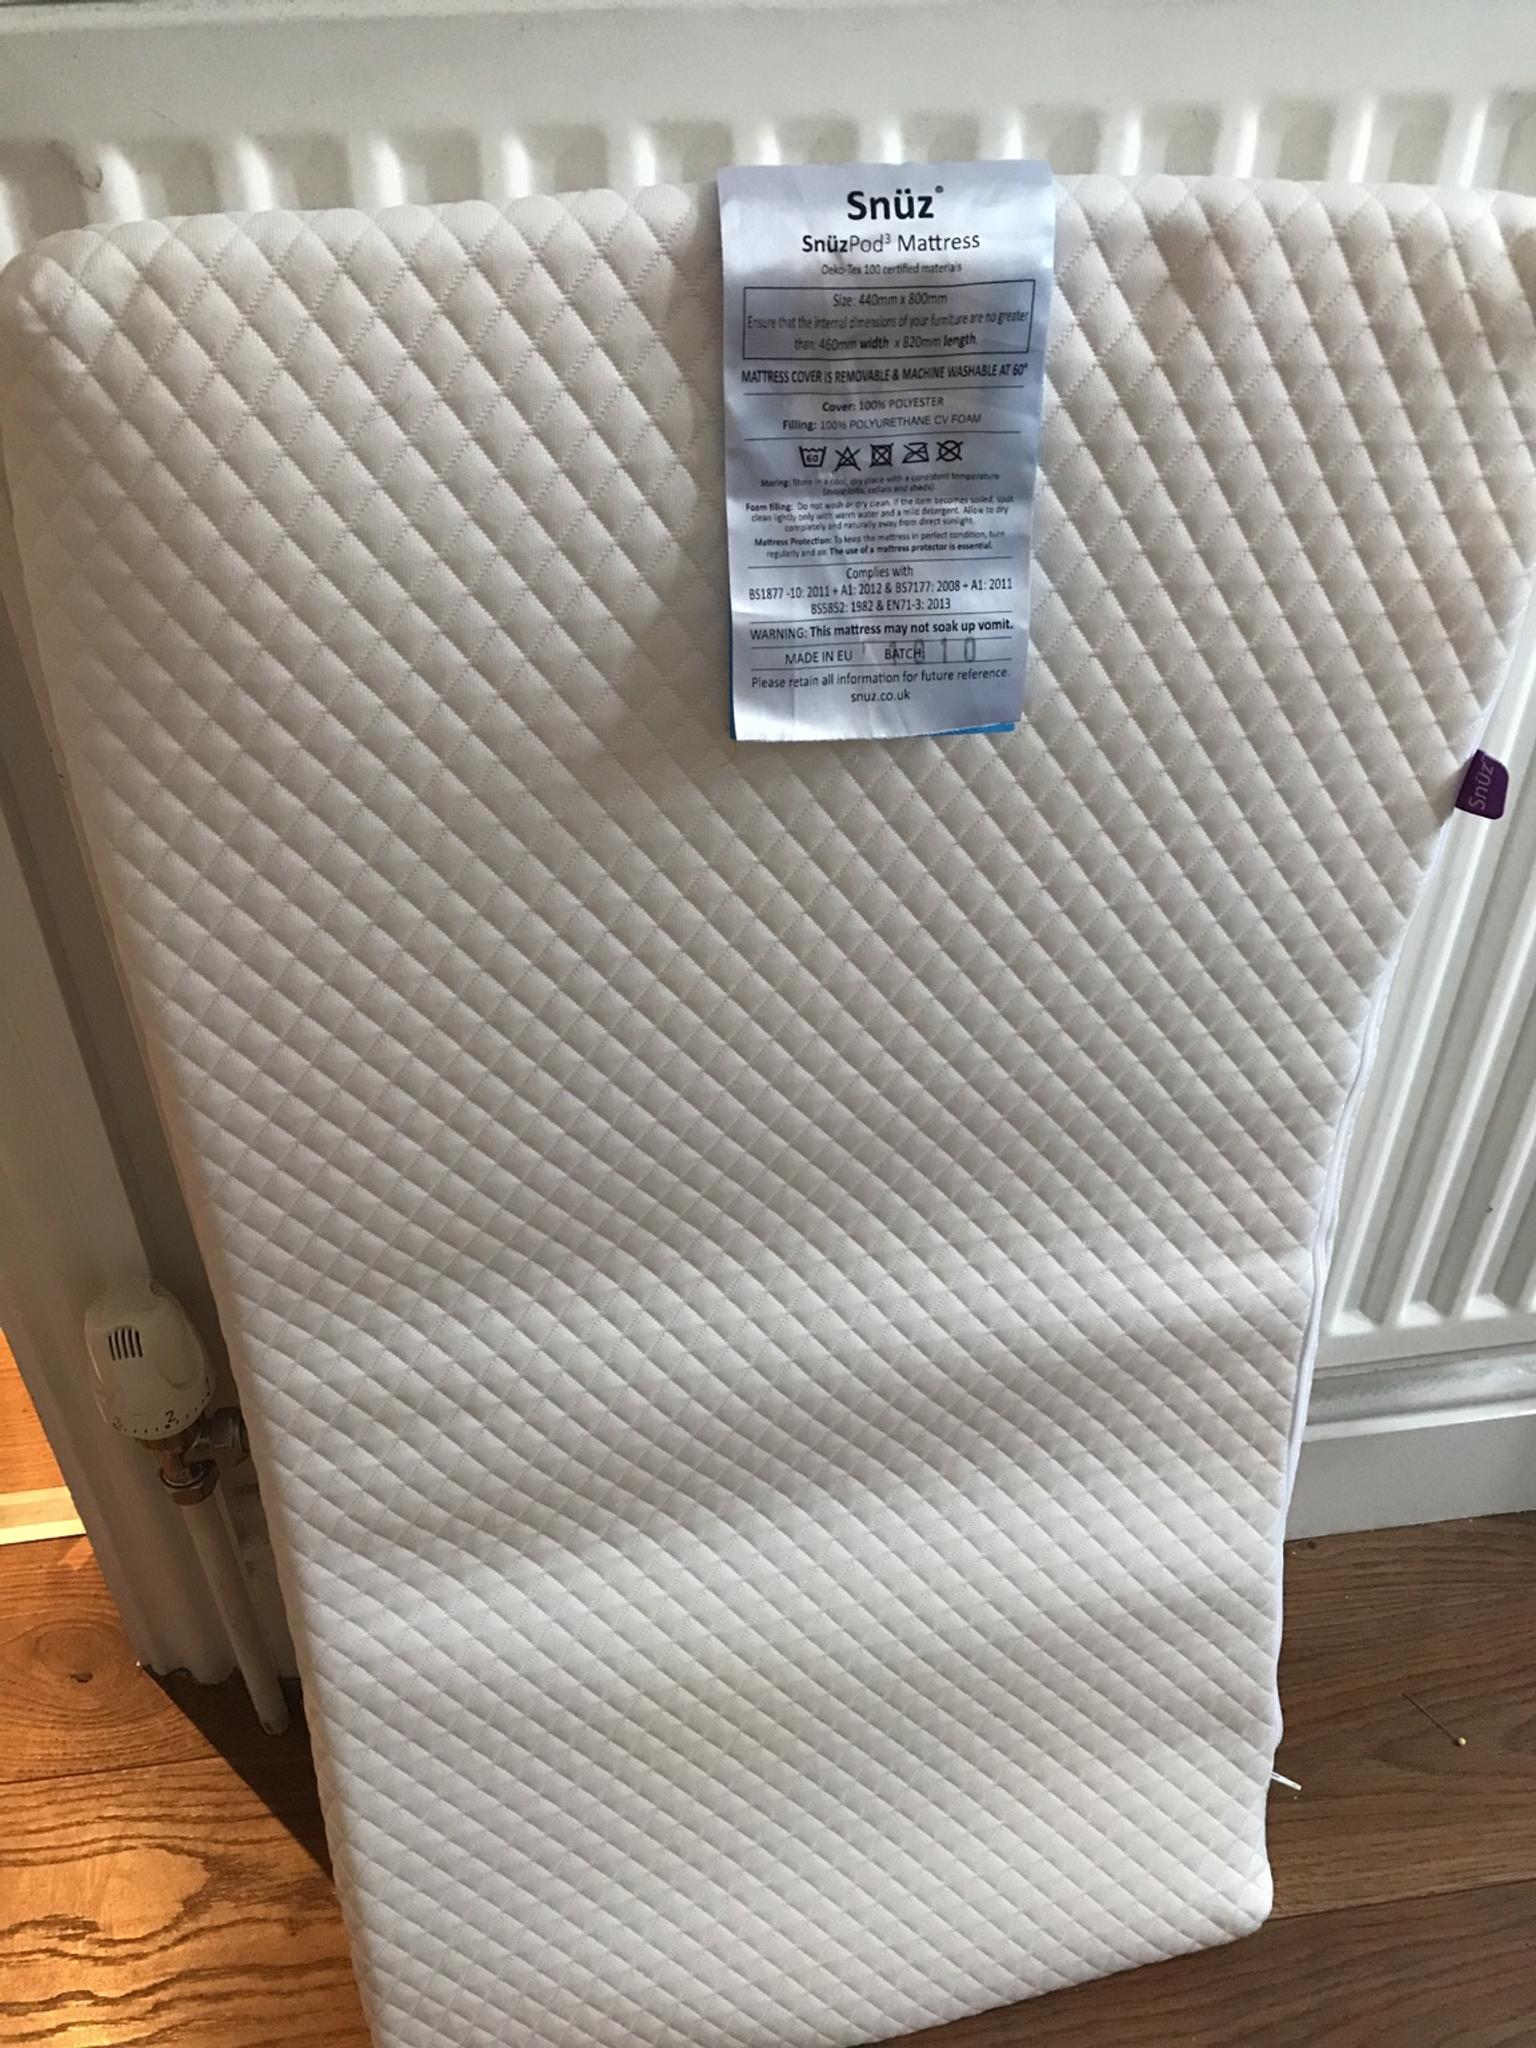 size of snuzpod 3 mattress